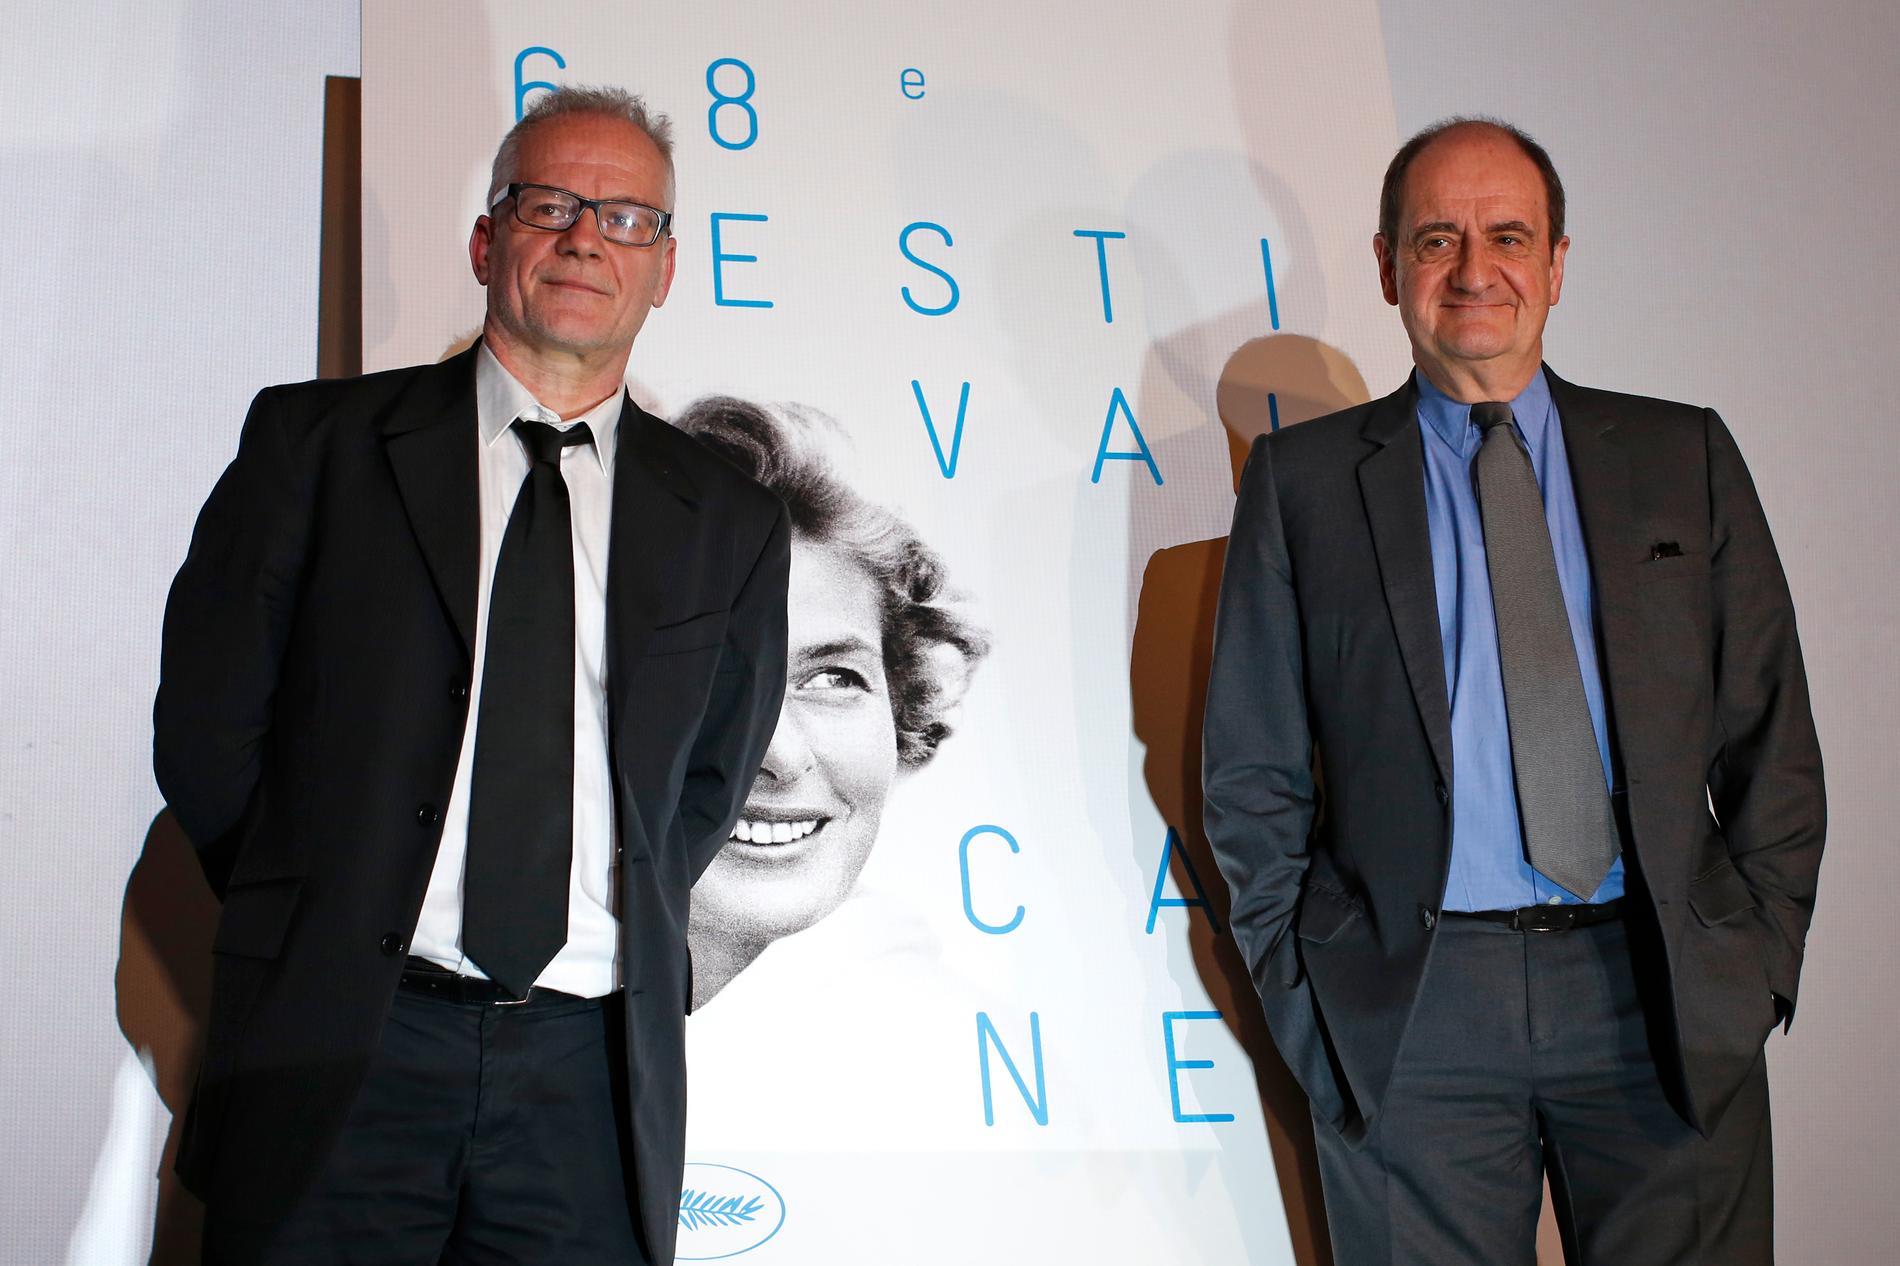 Cannes Film festivals Thierry Fremaux och Pierre Lescure presenterar årets filmer.